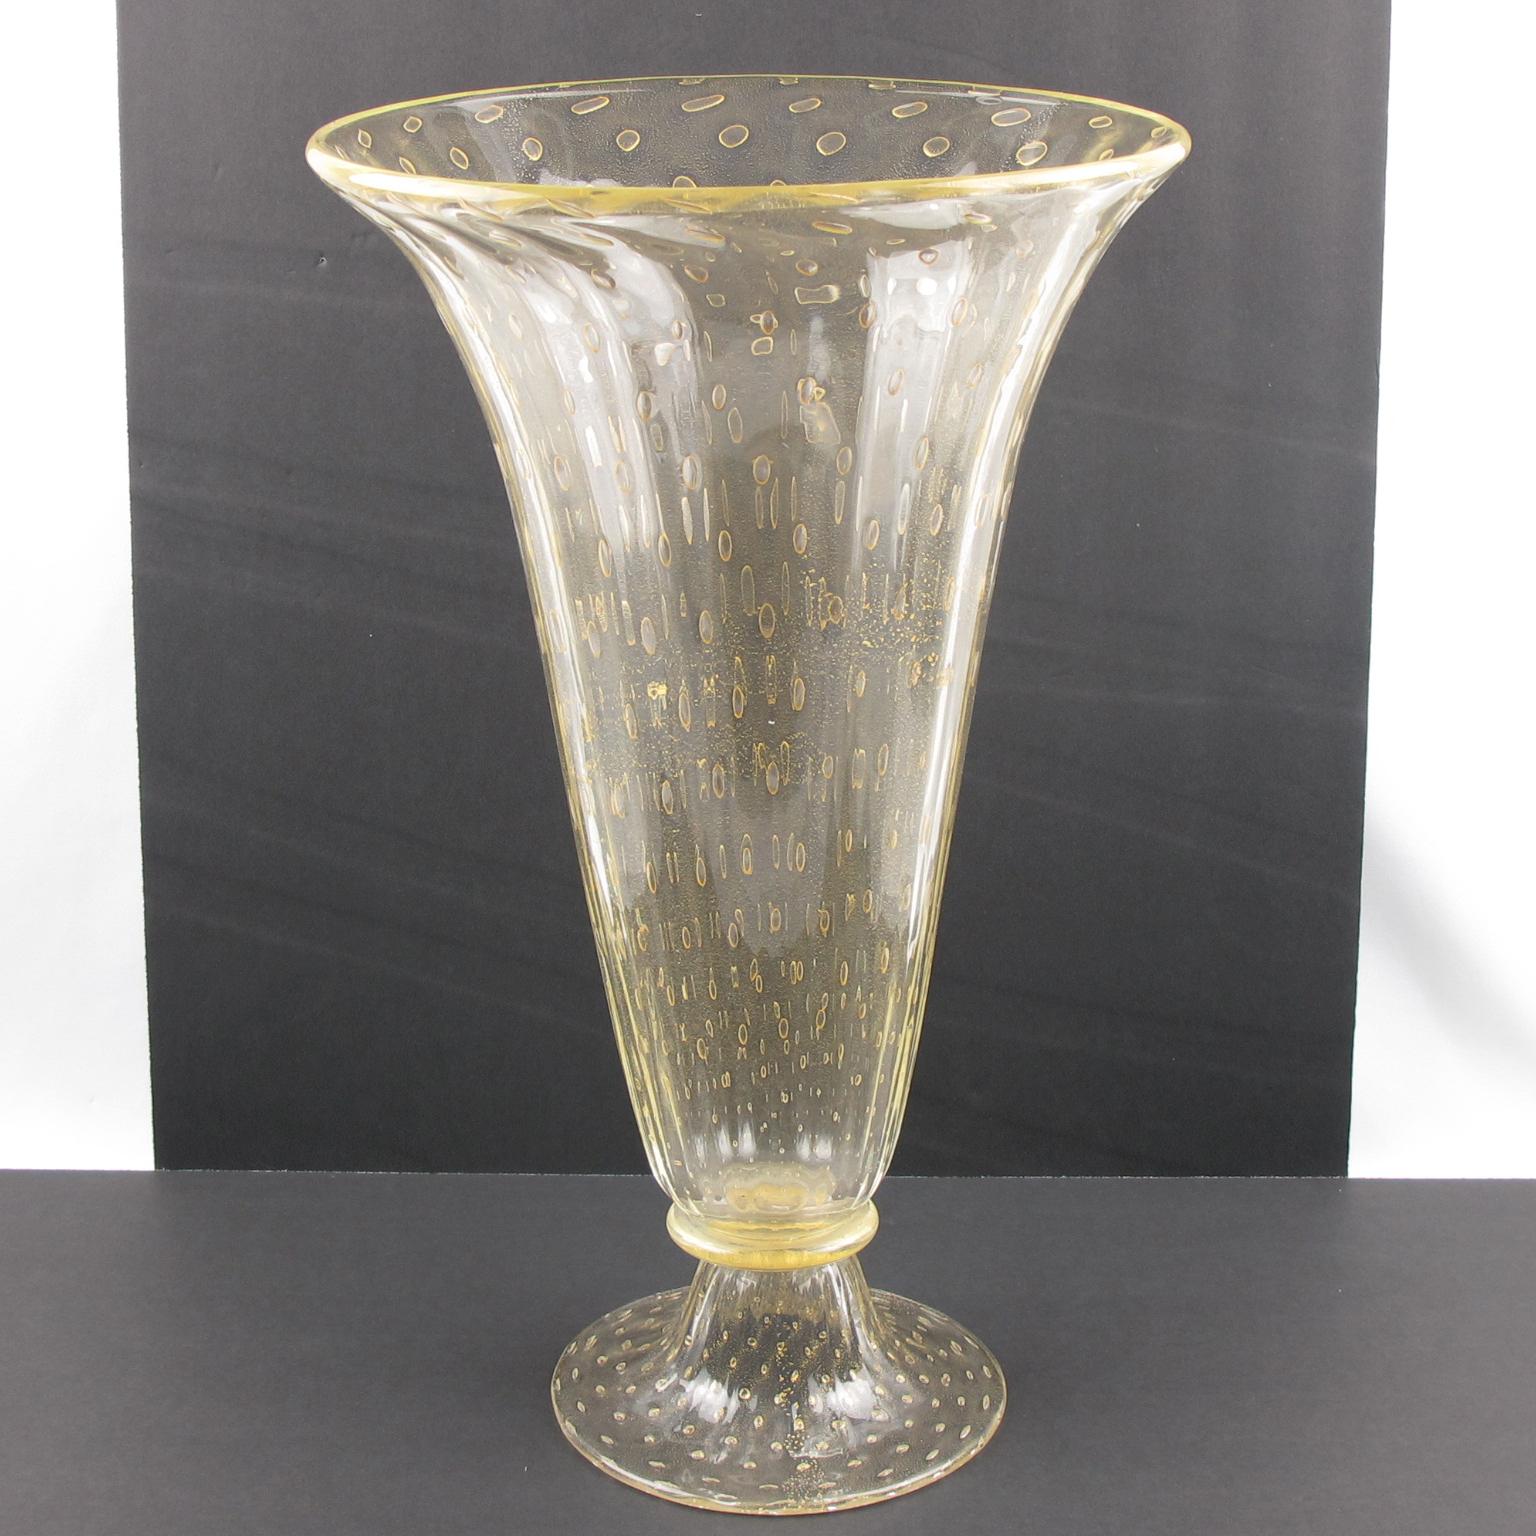 20th Century Italian Art Glass Murano Avventurina Sculptural Vase Gold Flakes and Bubbles